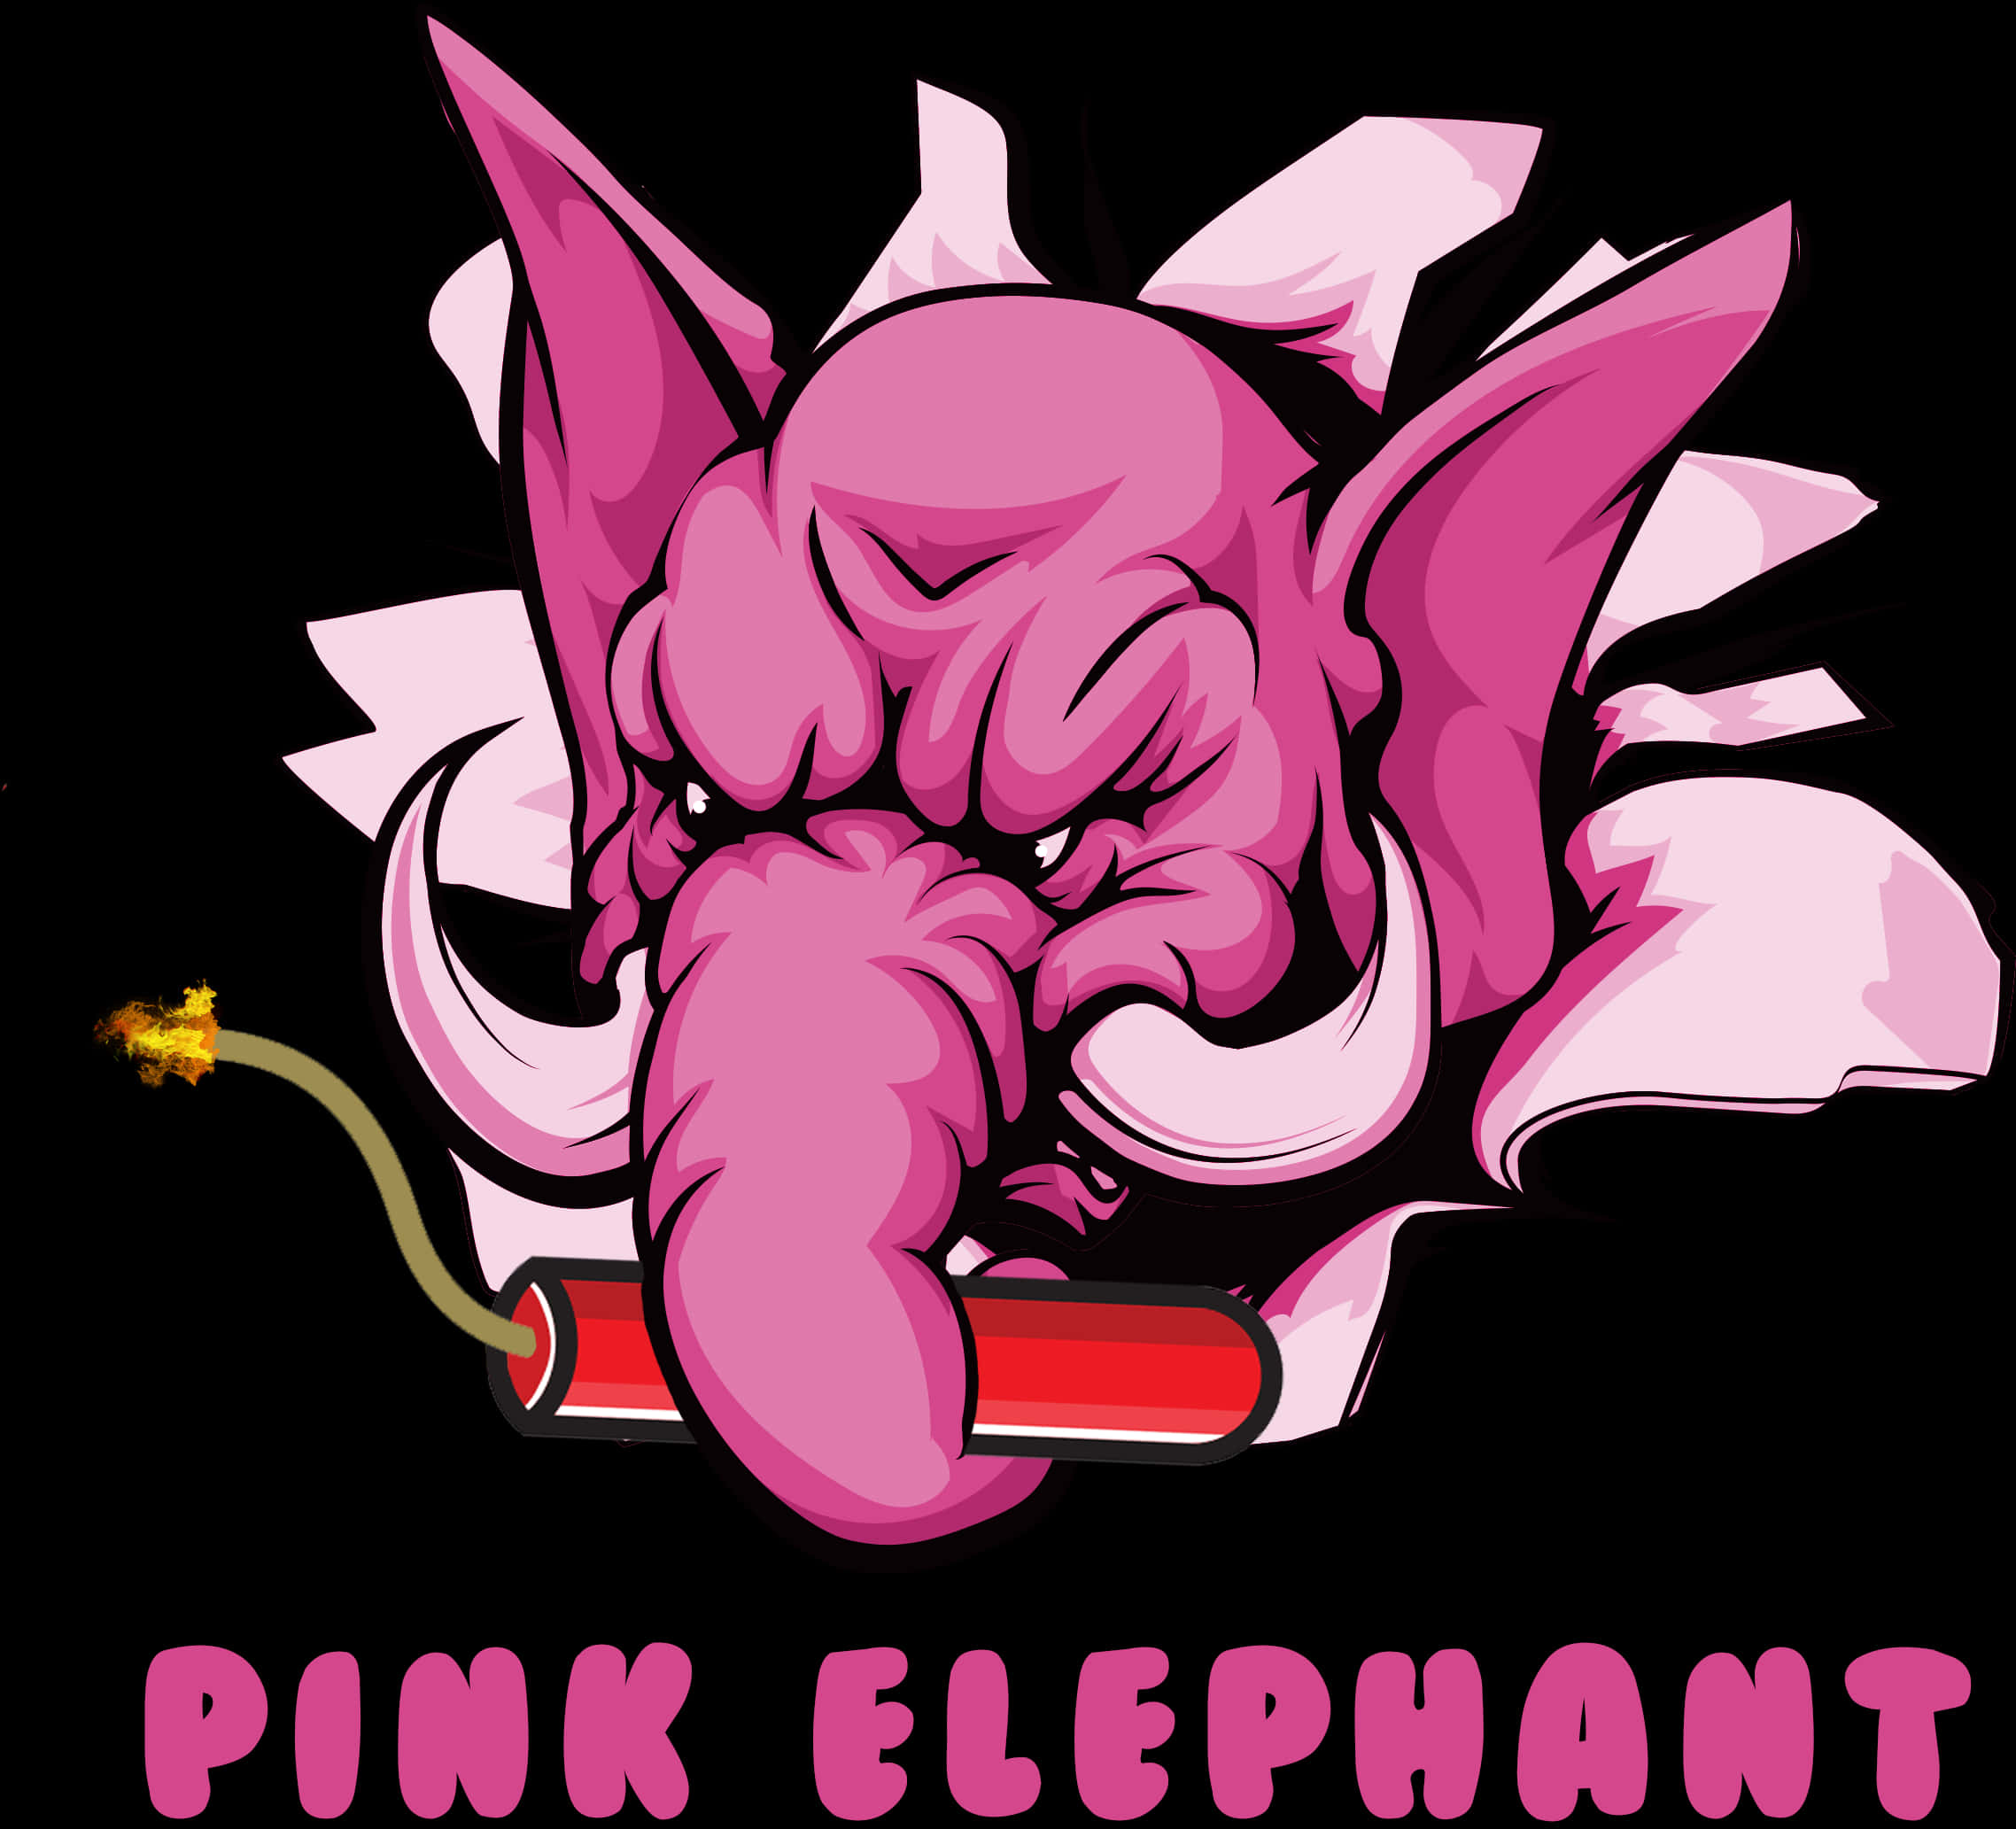 Pink Elephant Cartoon Illustration PNG image